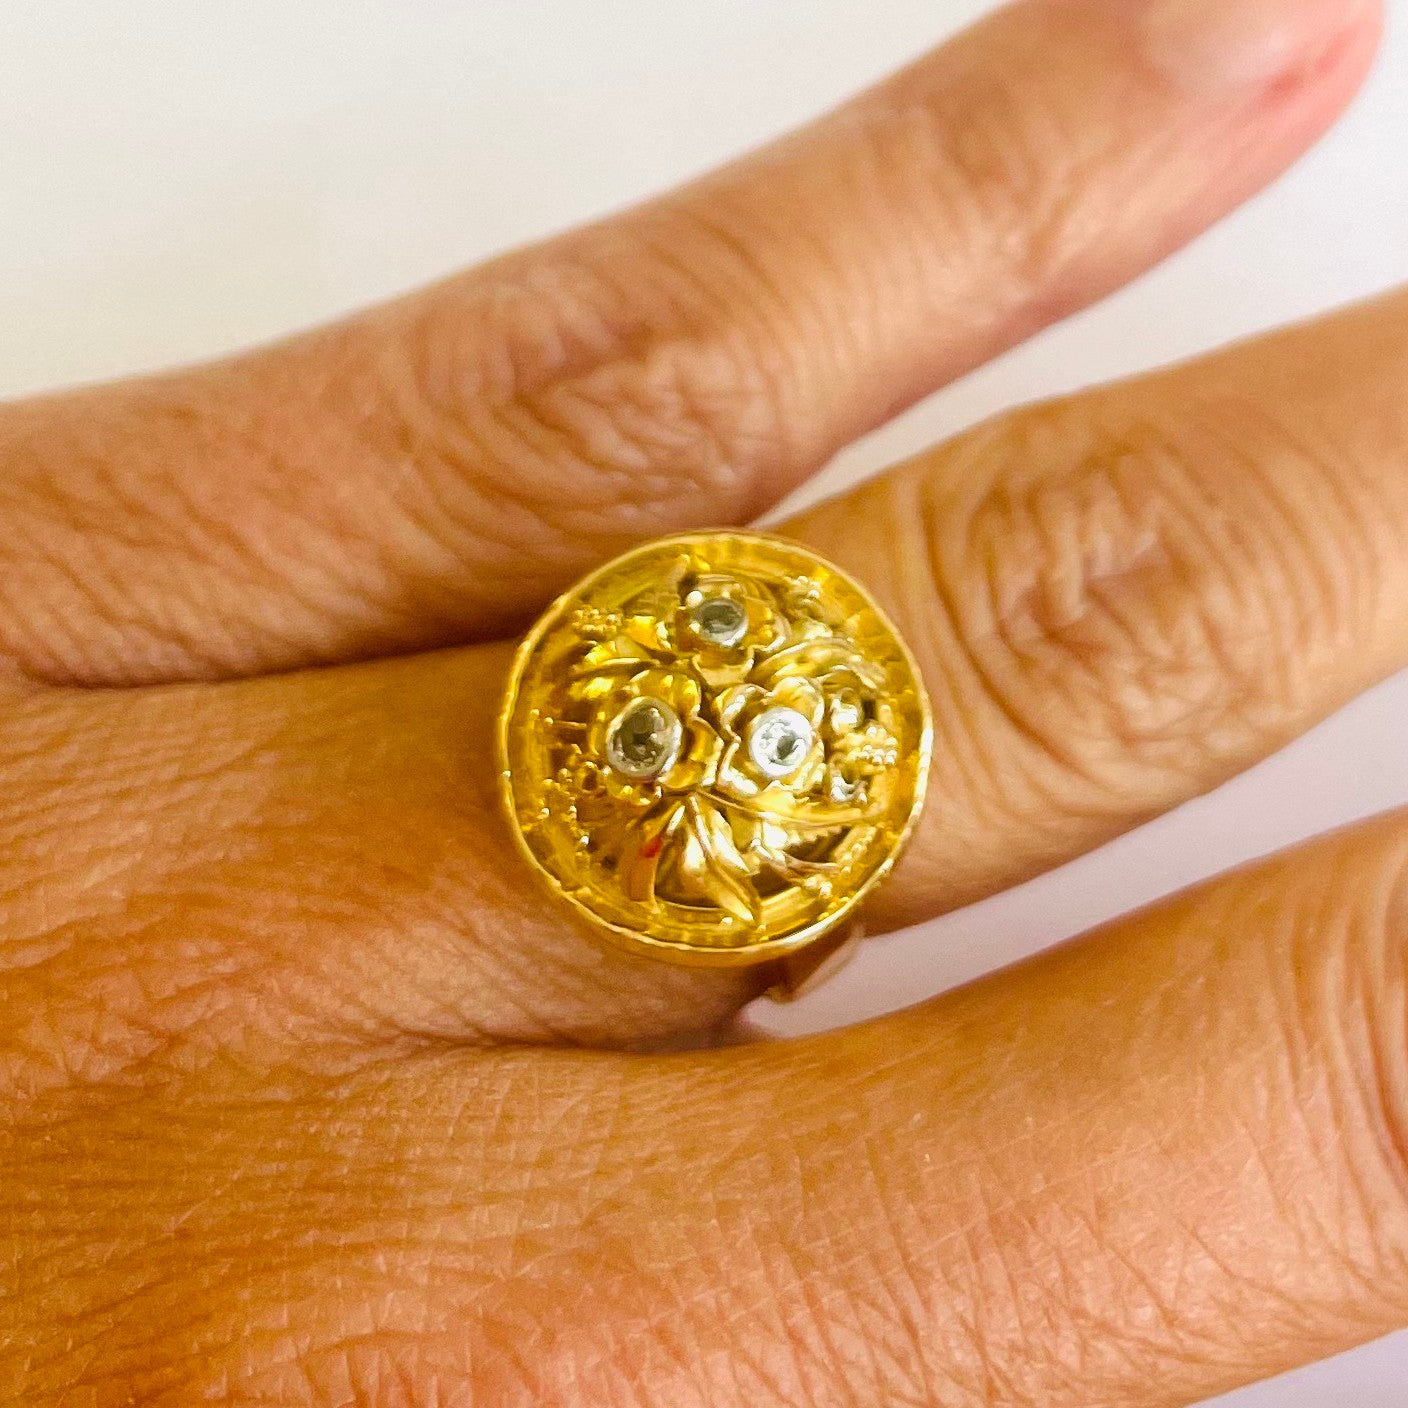 Wilm 1960s 14KT Yellow Gold Diamond Ring on finger